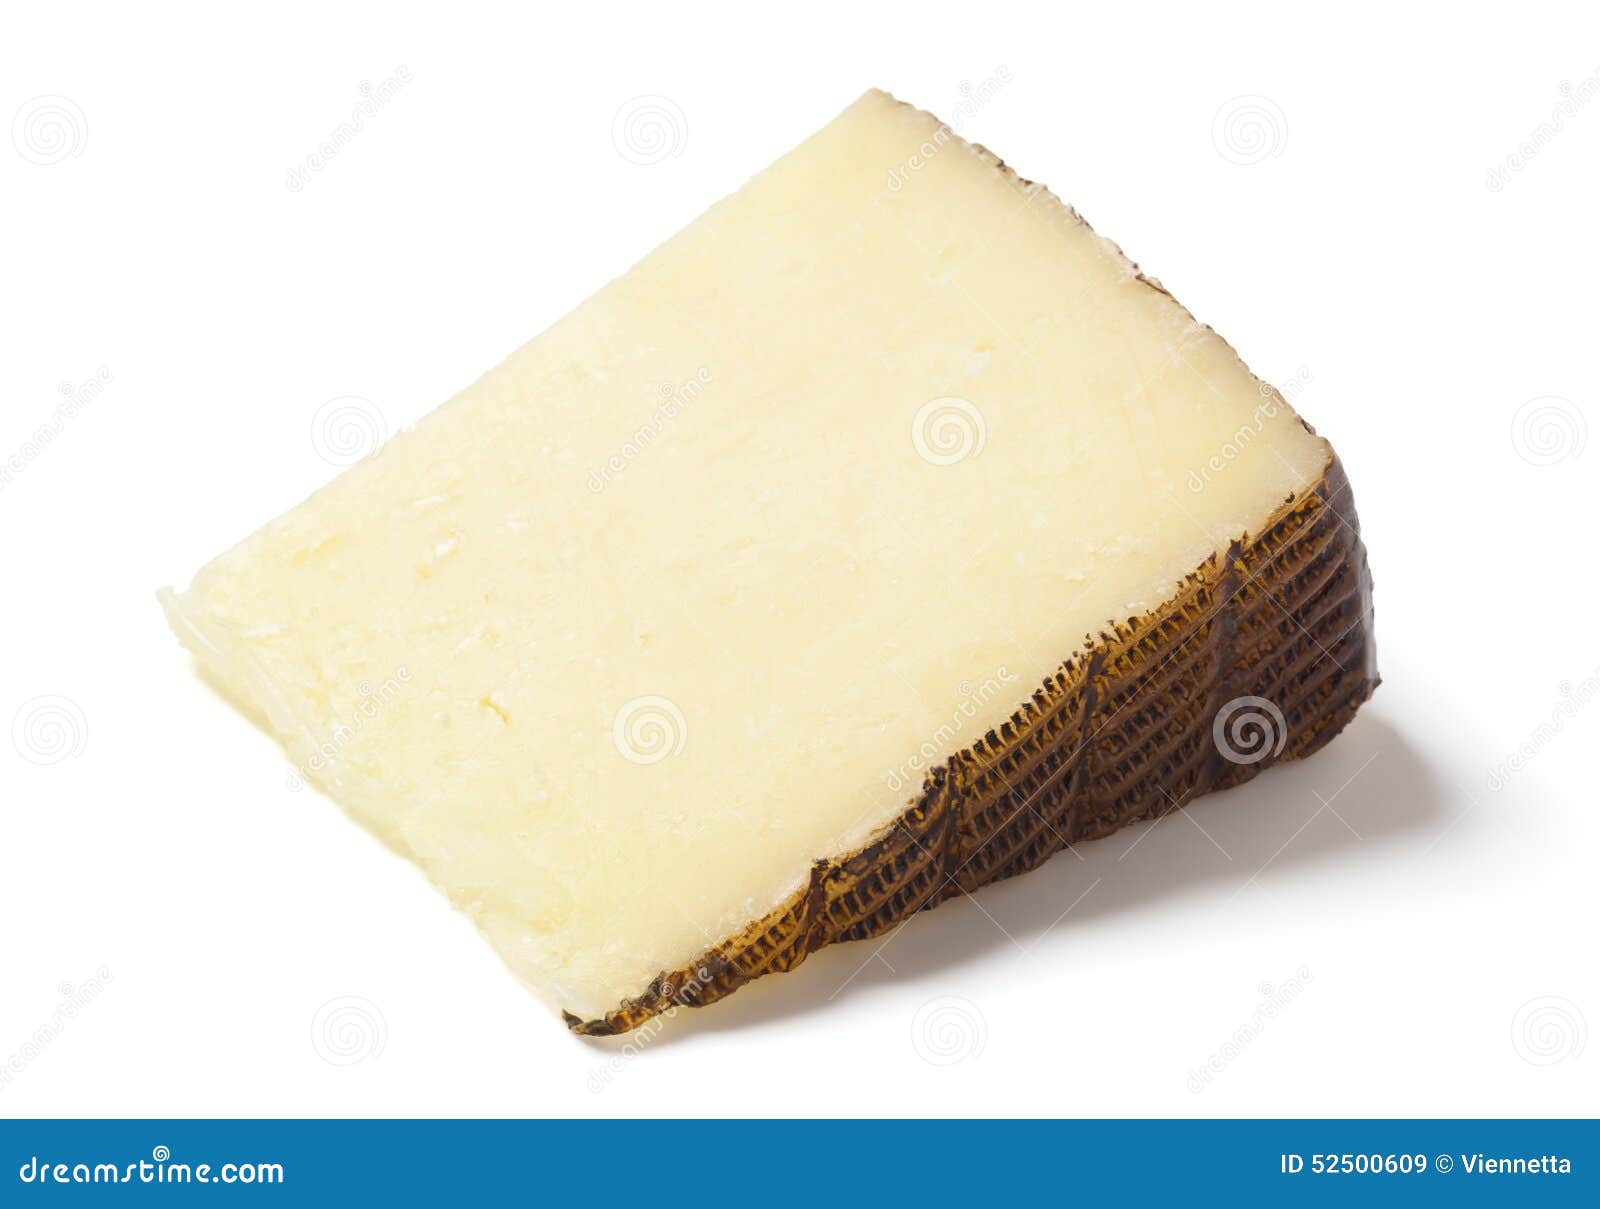 manchego cheese on white background